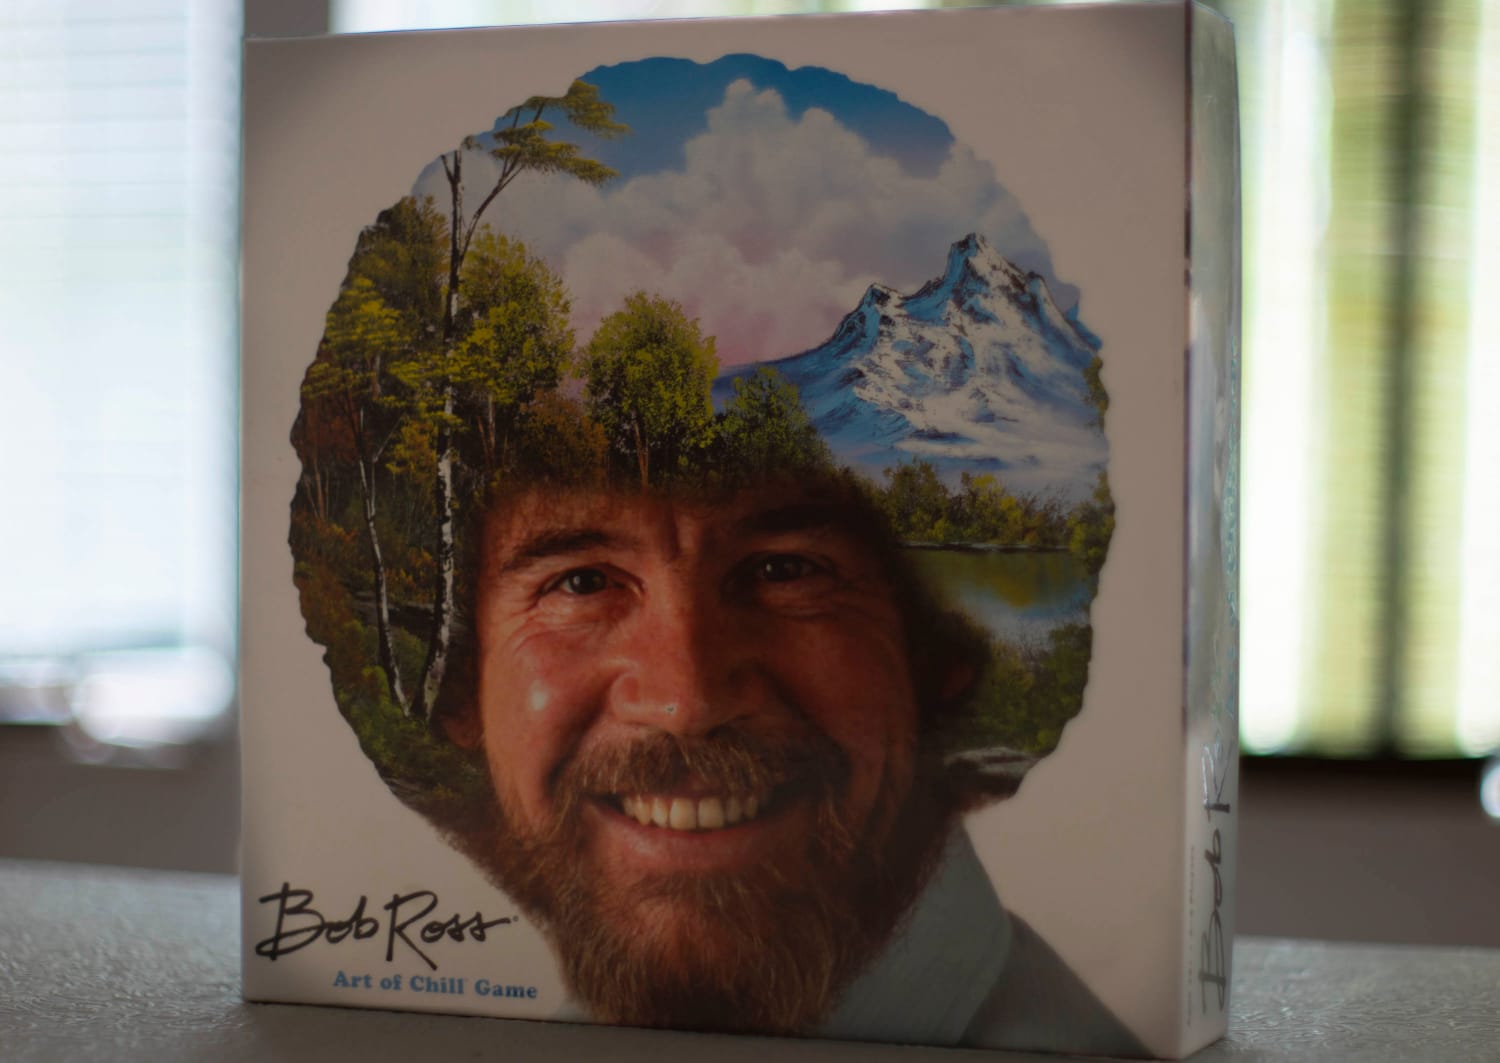 Bob Ross 'The Joy of Painting' Free on YouTube